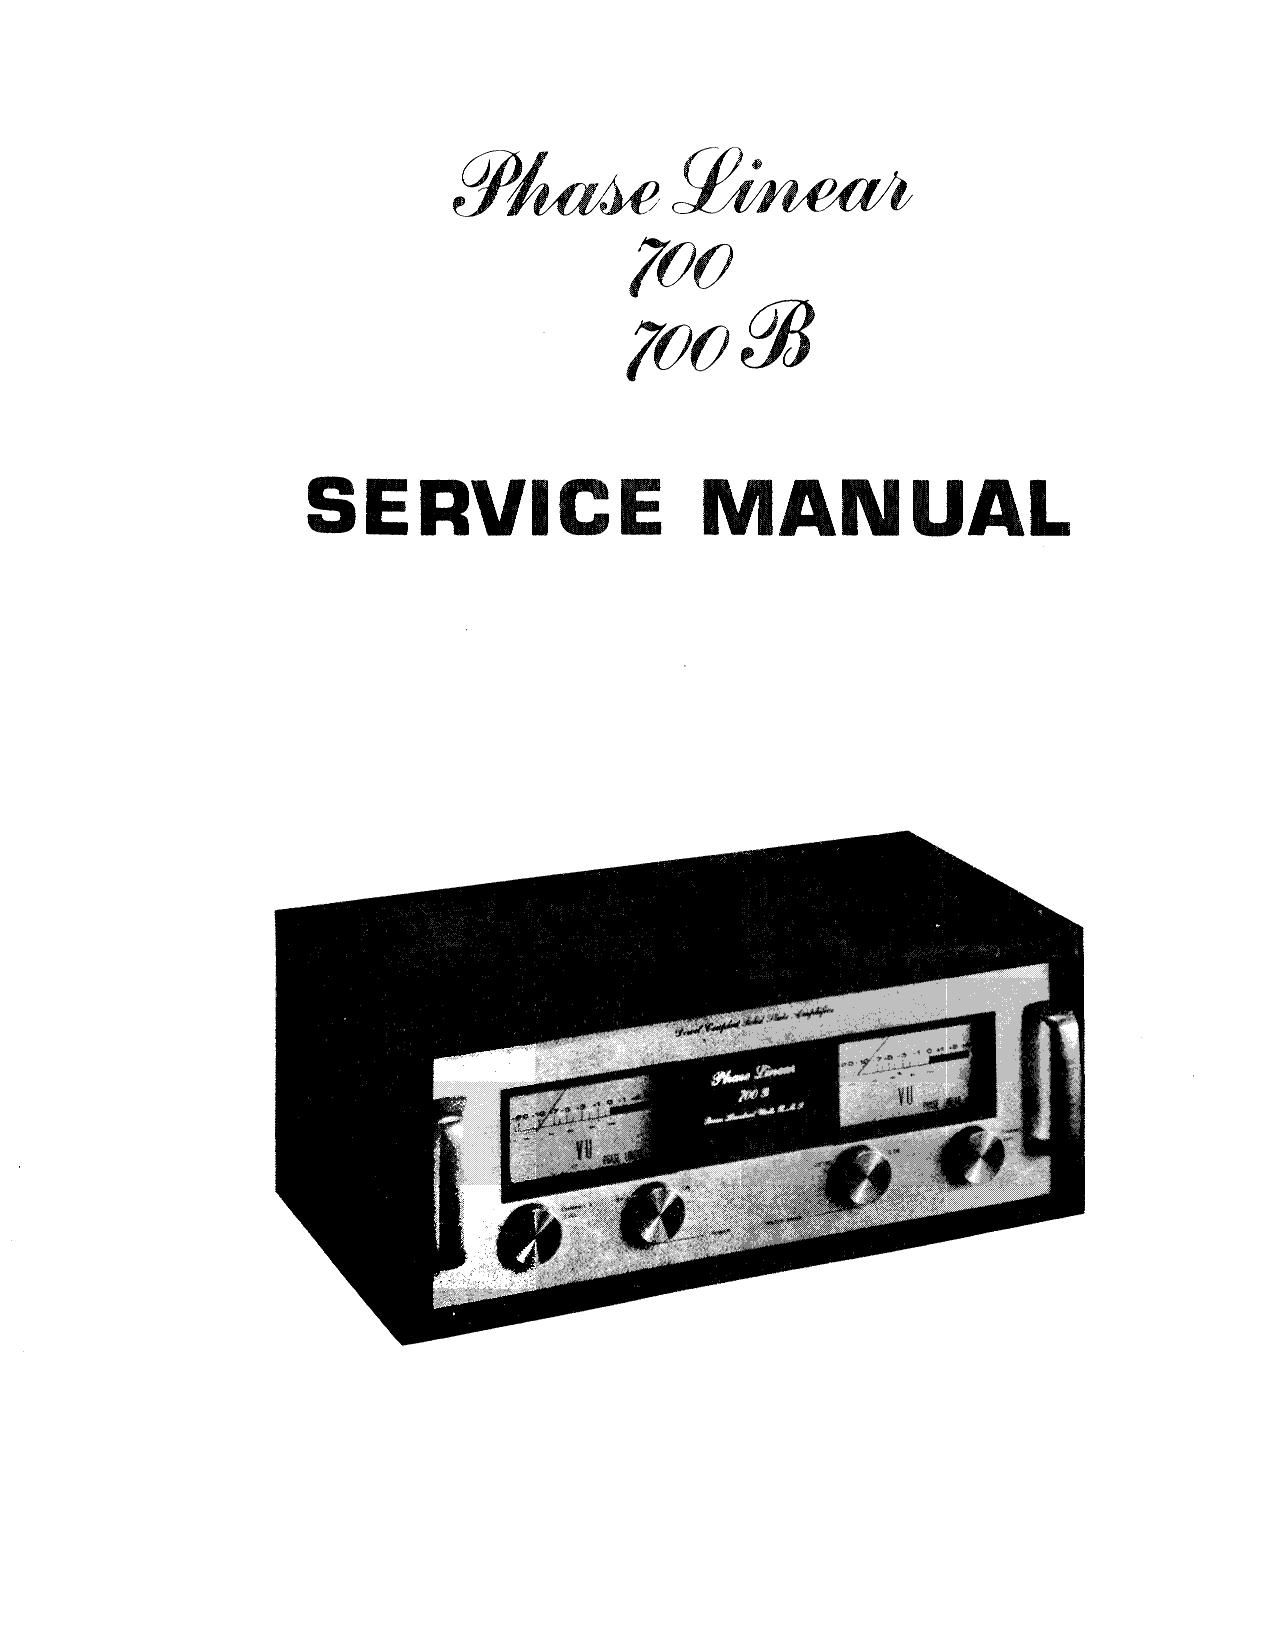 Phase Linear 700 700B Service Manual